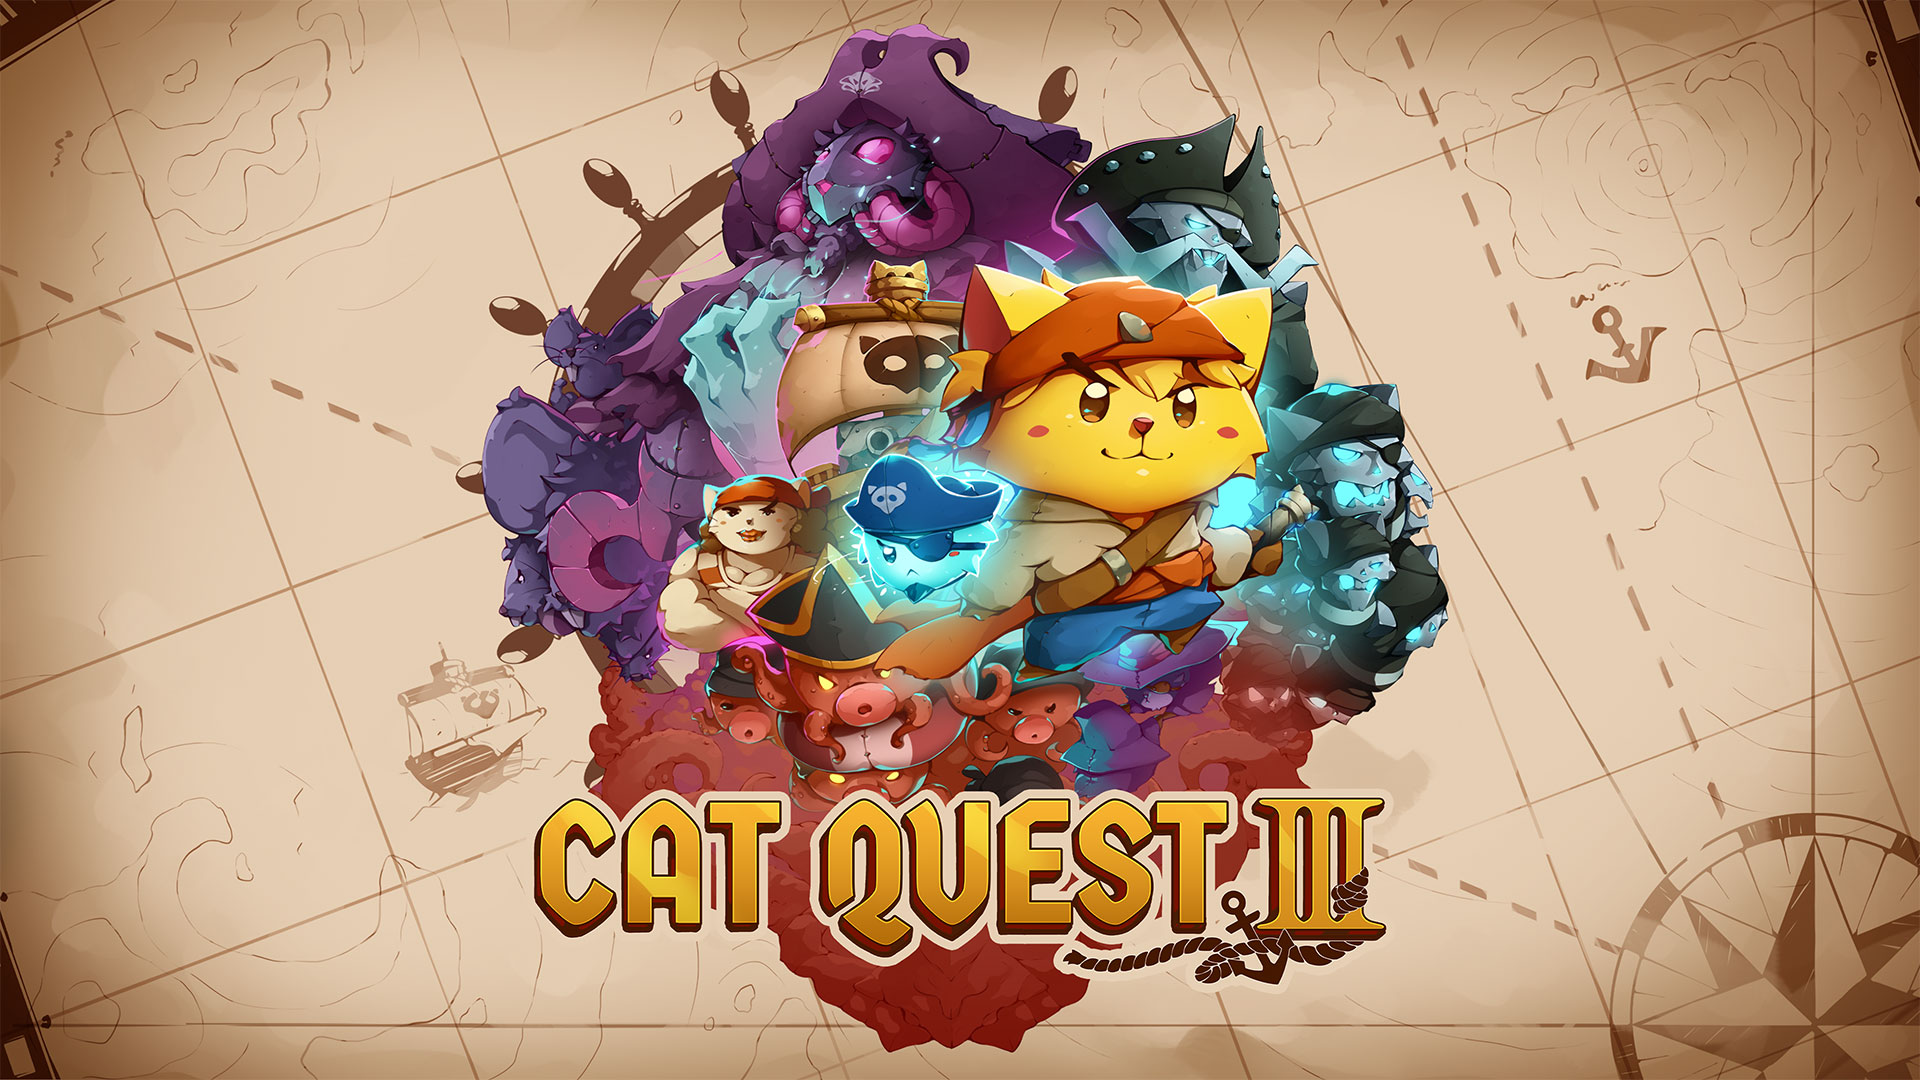 Cat Quest III from The Gentlebros and Kepler Interactive